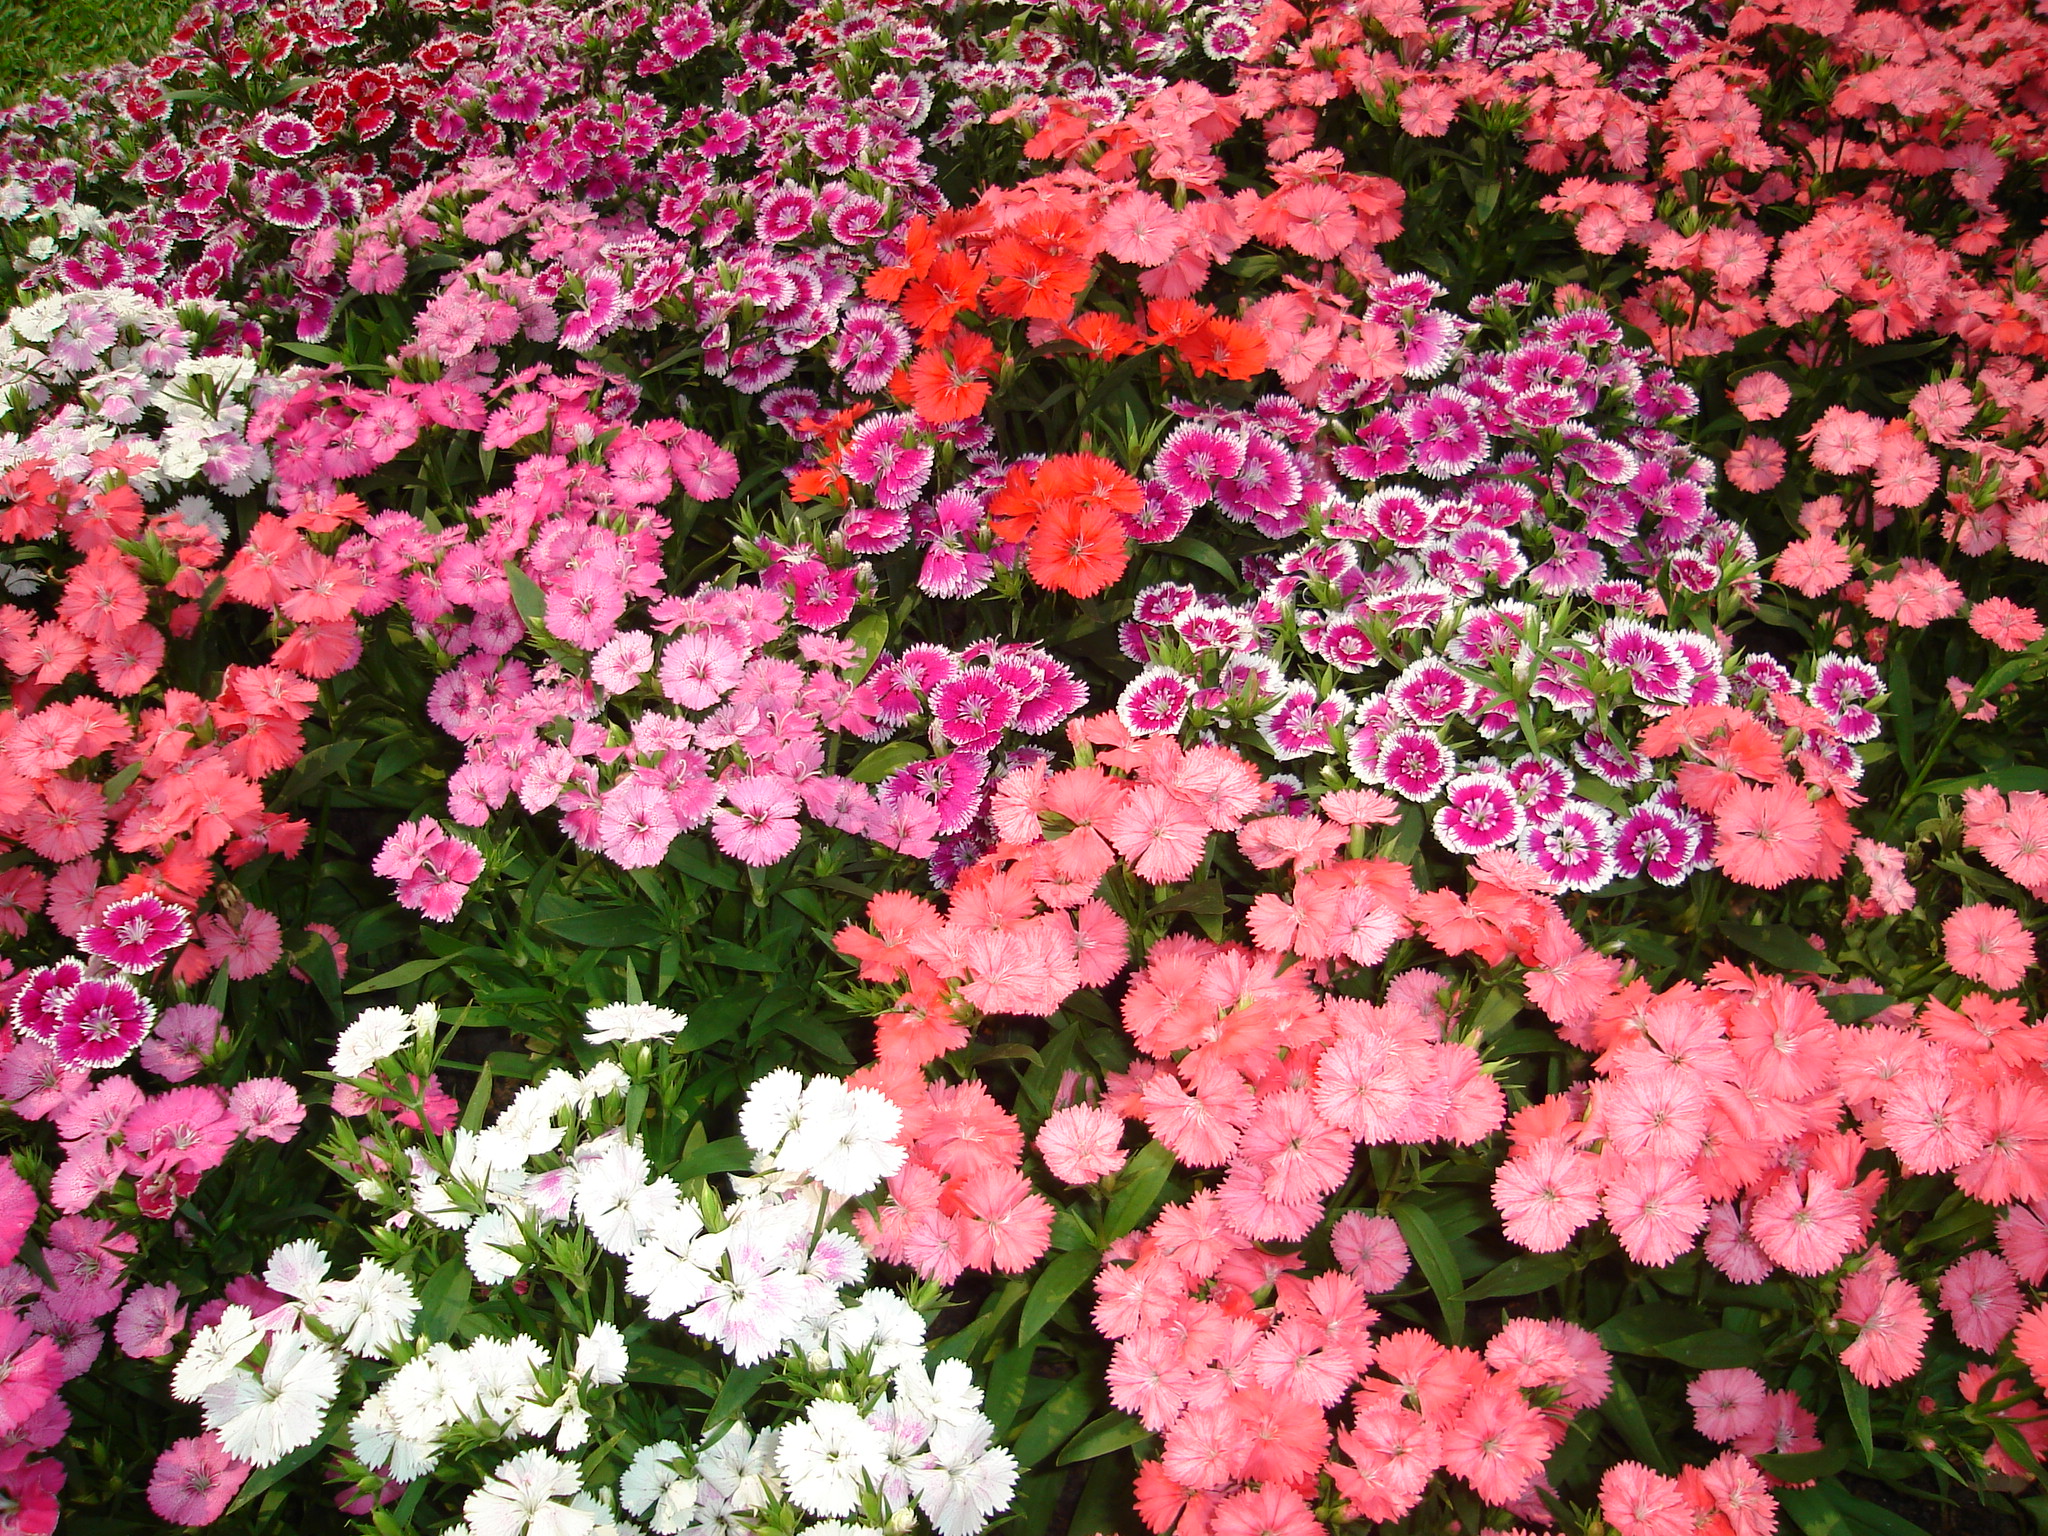 File:Flower garden found in Tak Thailand 1.jpg - Wikimedia Commons